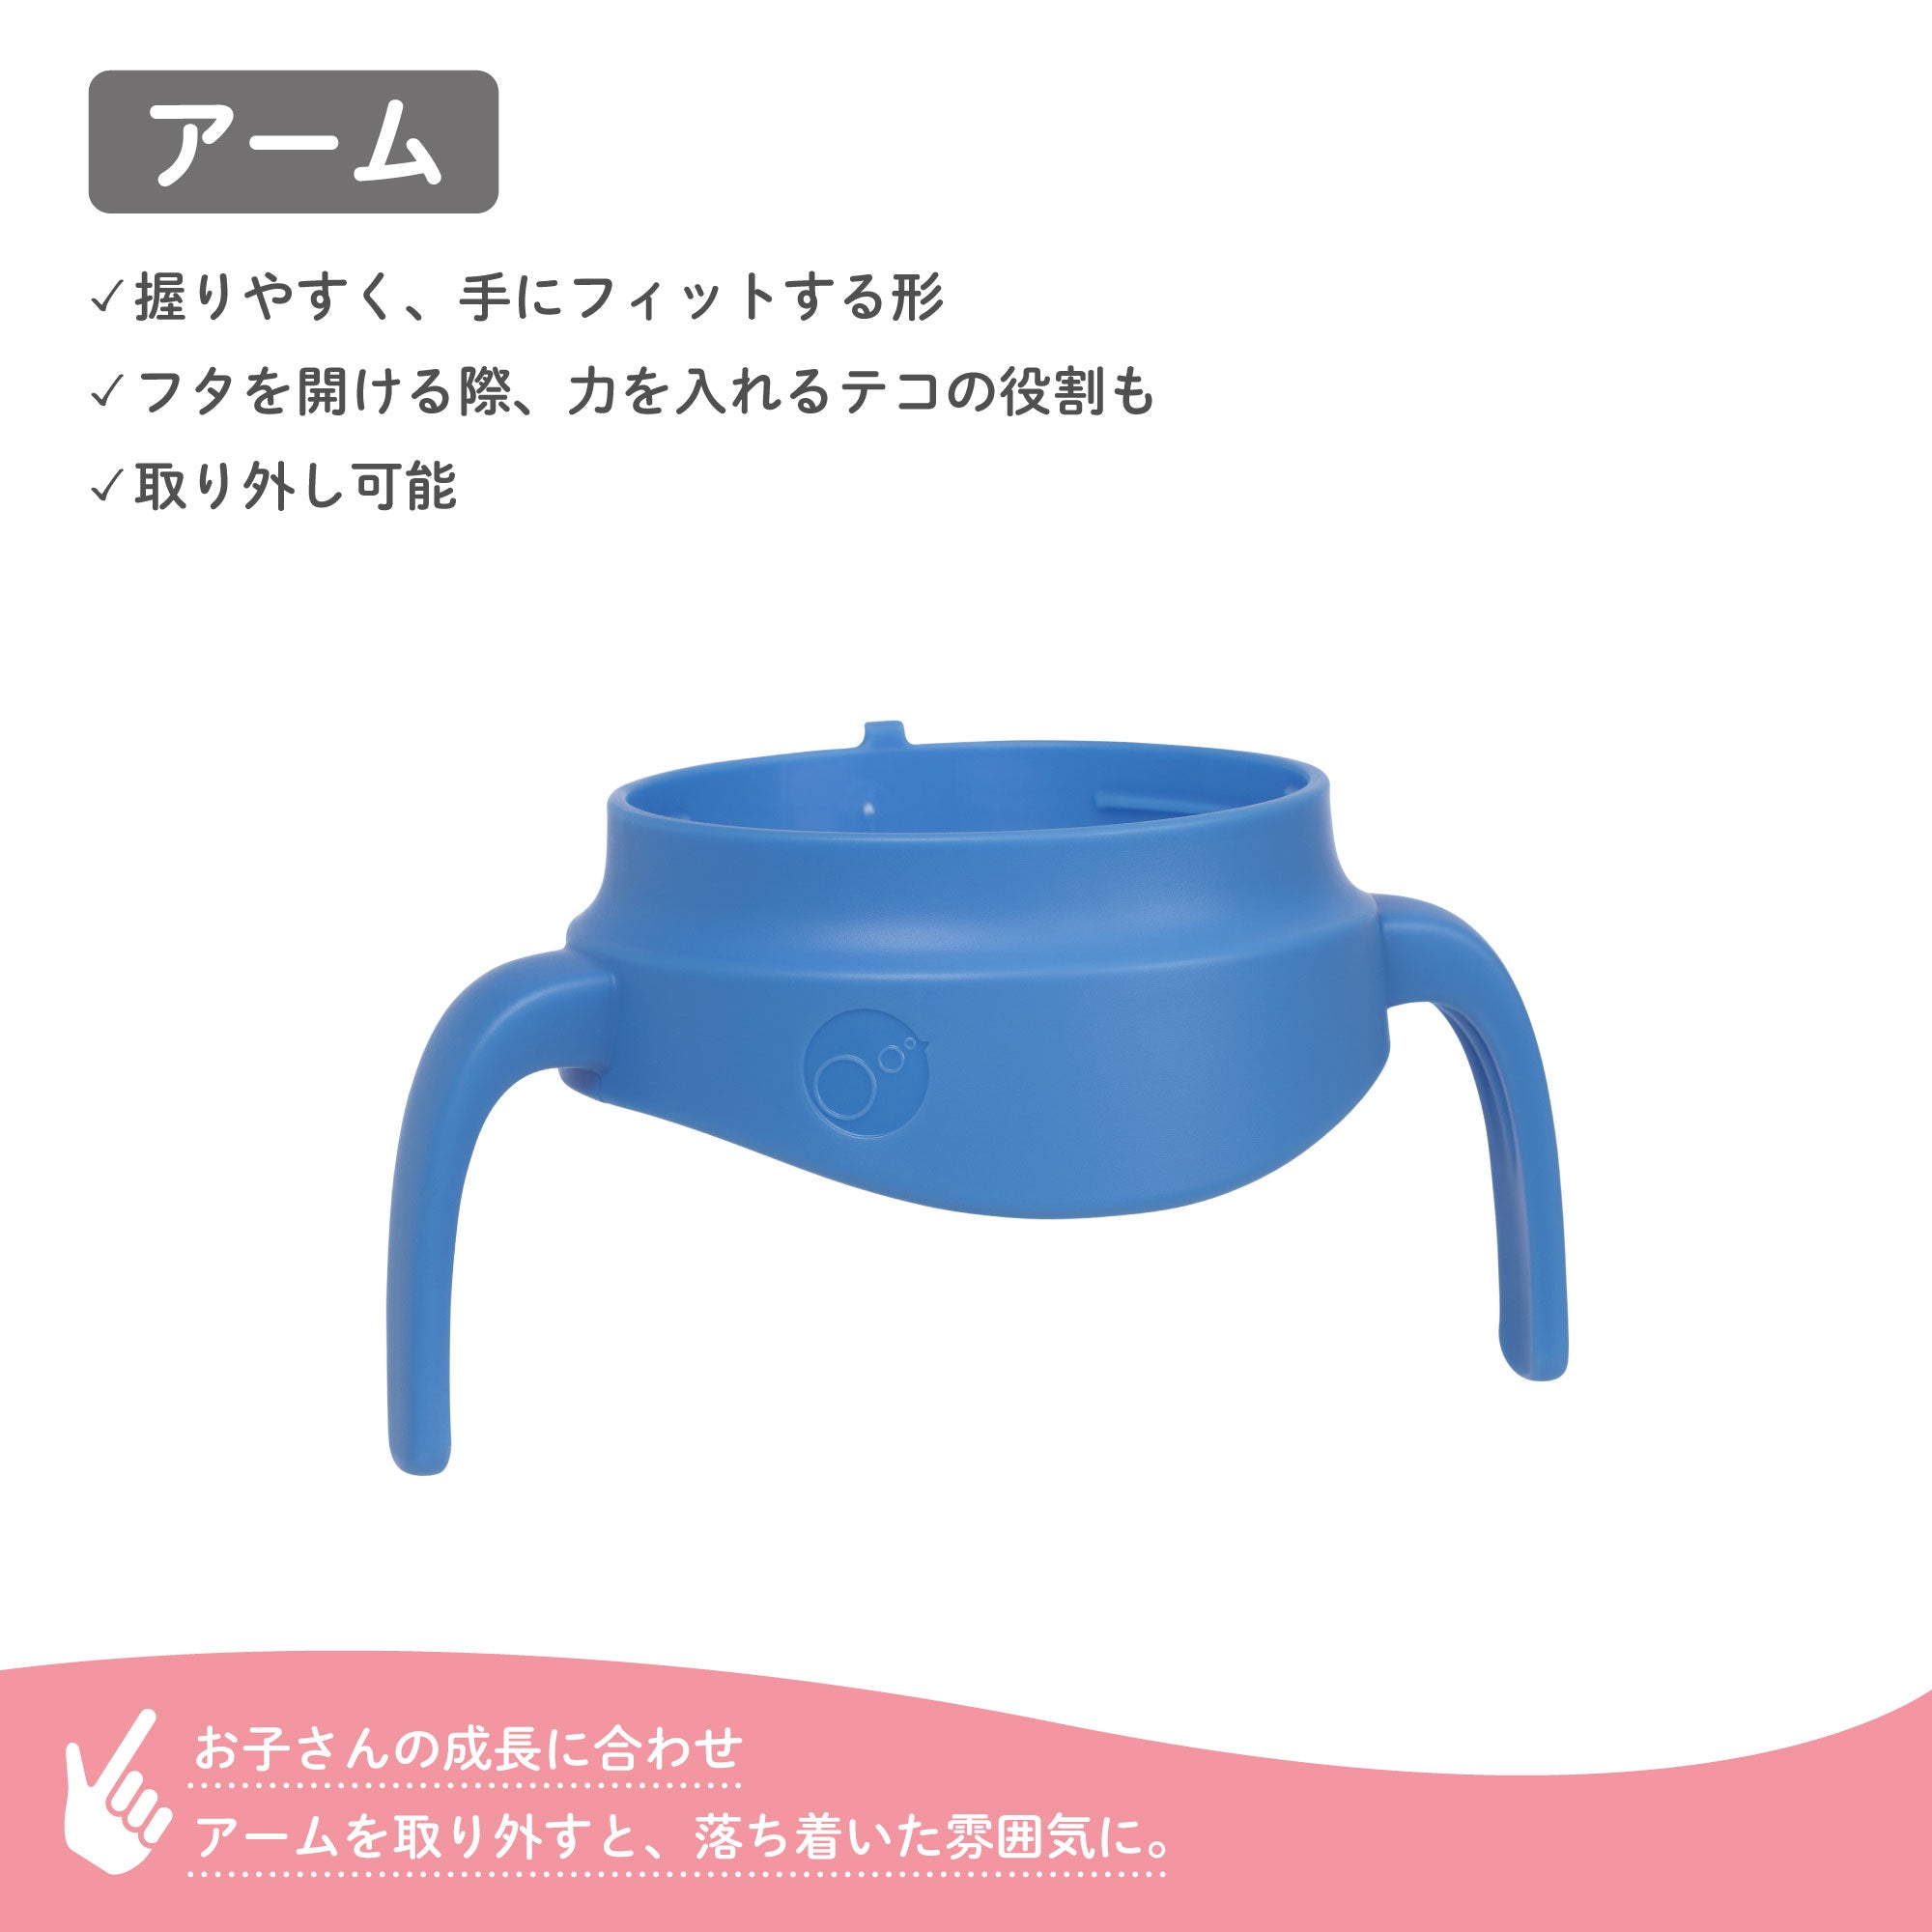 *b.box* Insulated food jar ステンレスフードジャー - blue slate